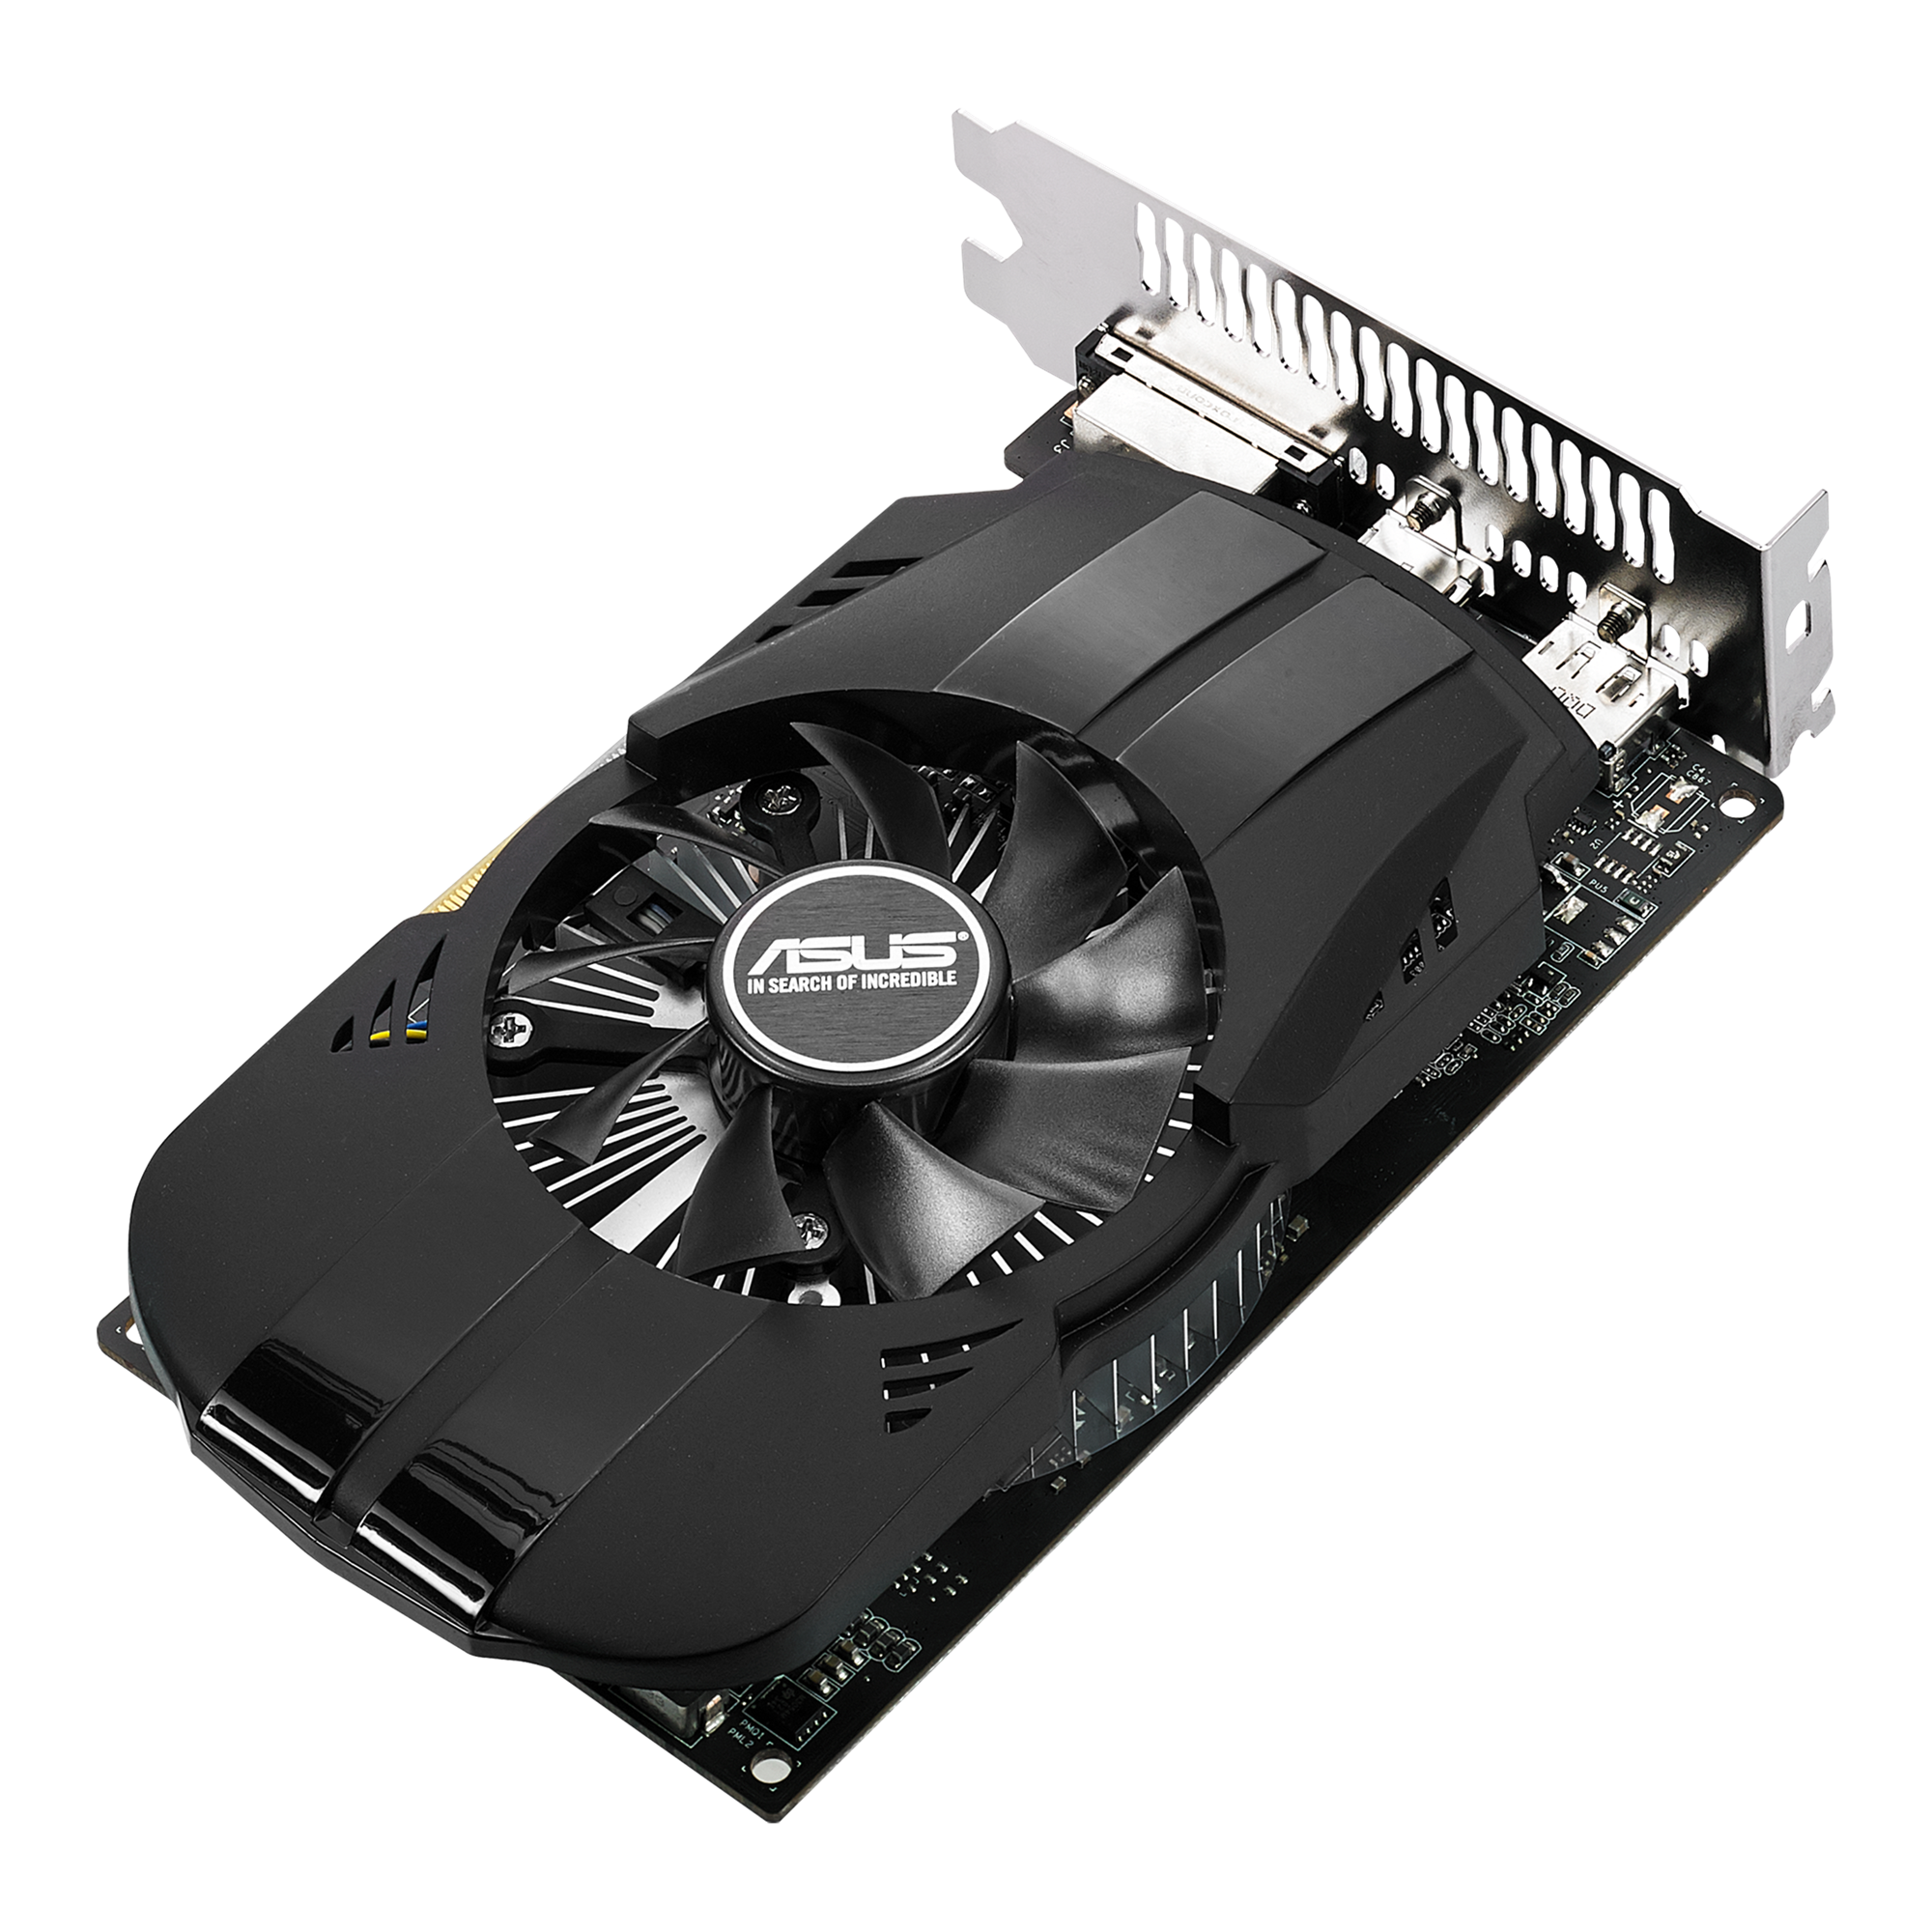 ASUS DUAL GeForce GTX 1050ti 4GB